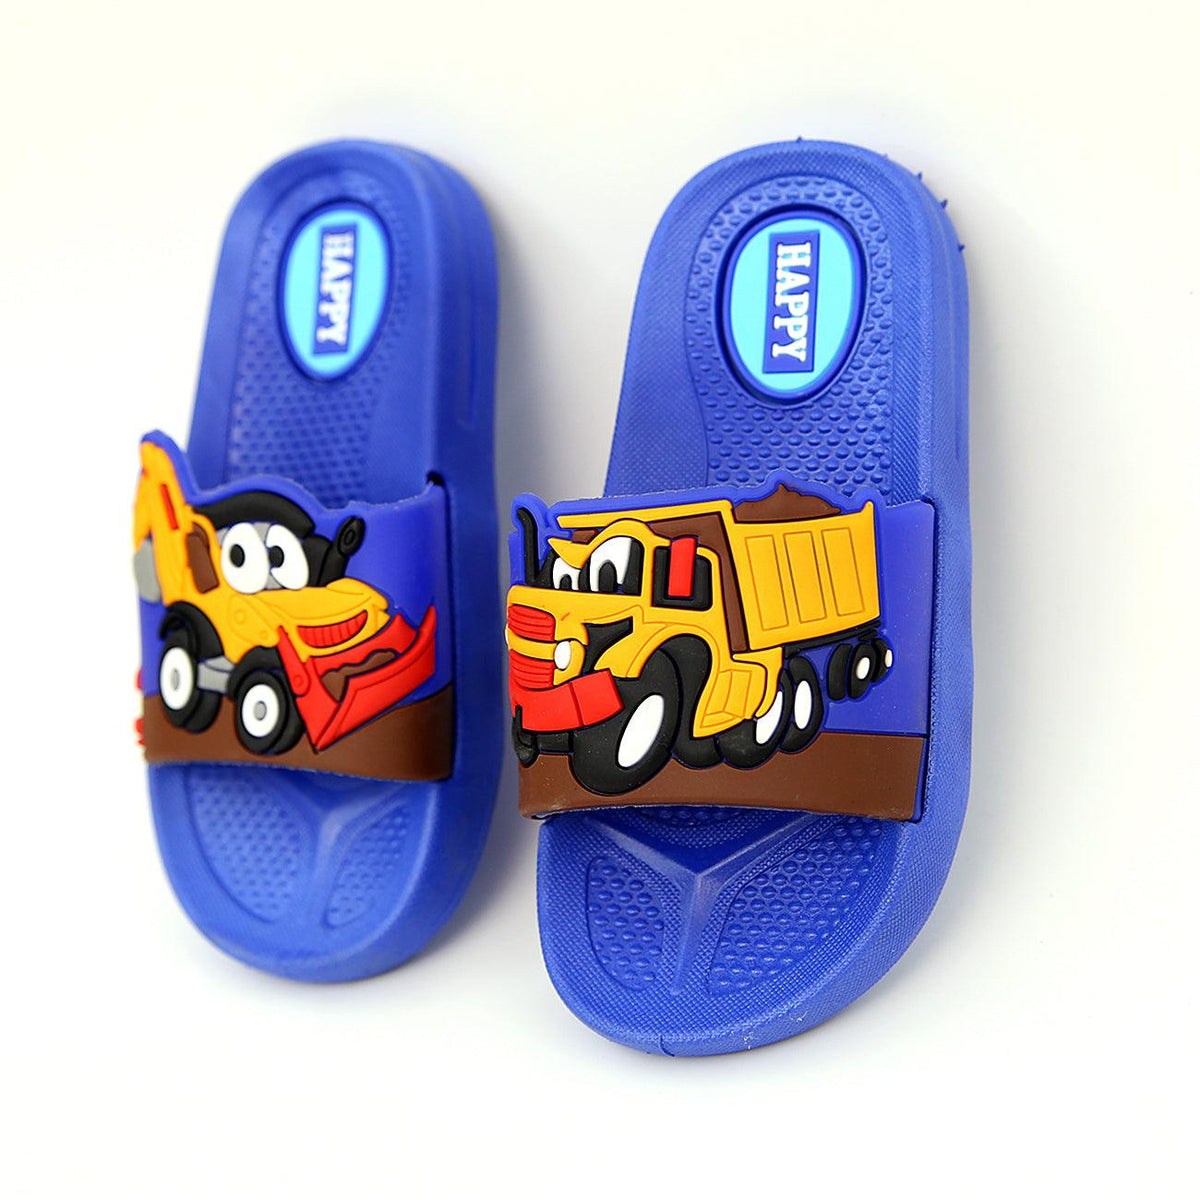 Imported Non Slip Rubber Sole Animated Slipper For Kids - Brands River